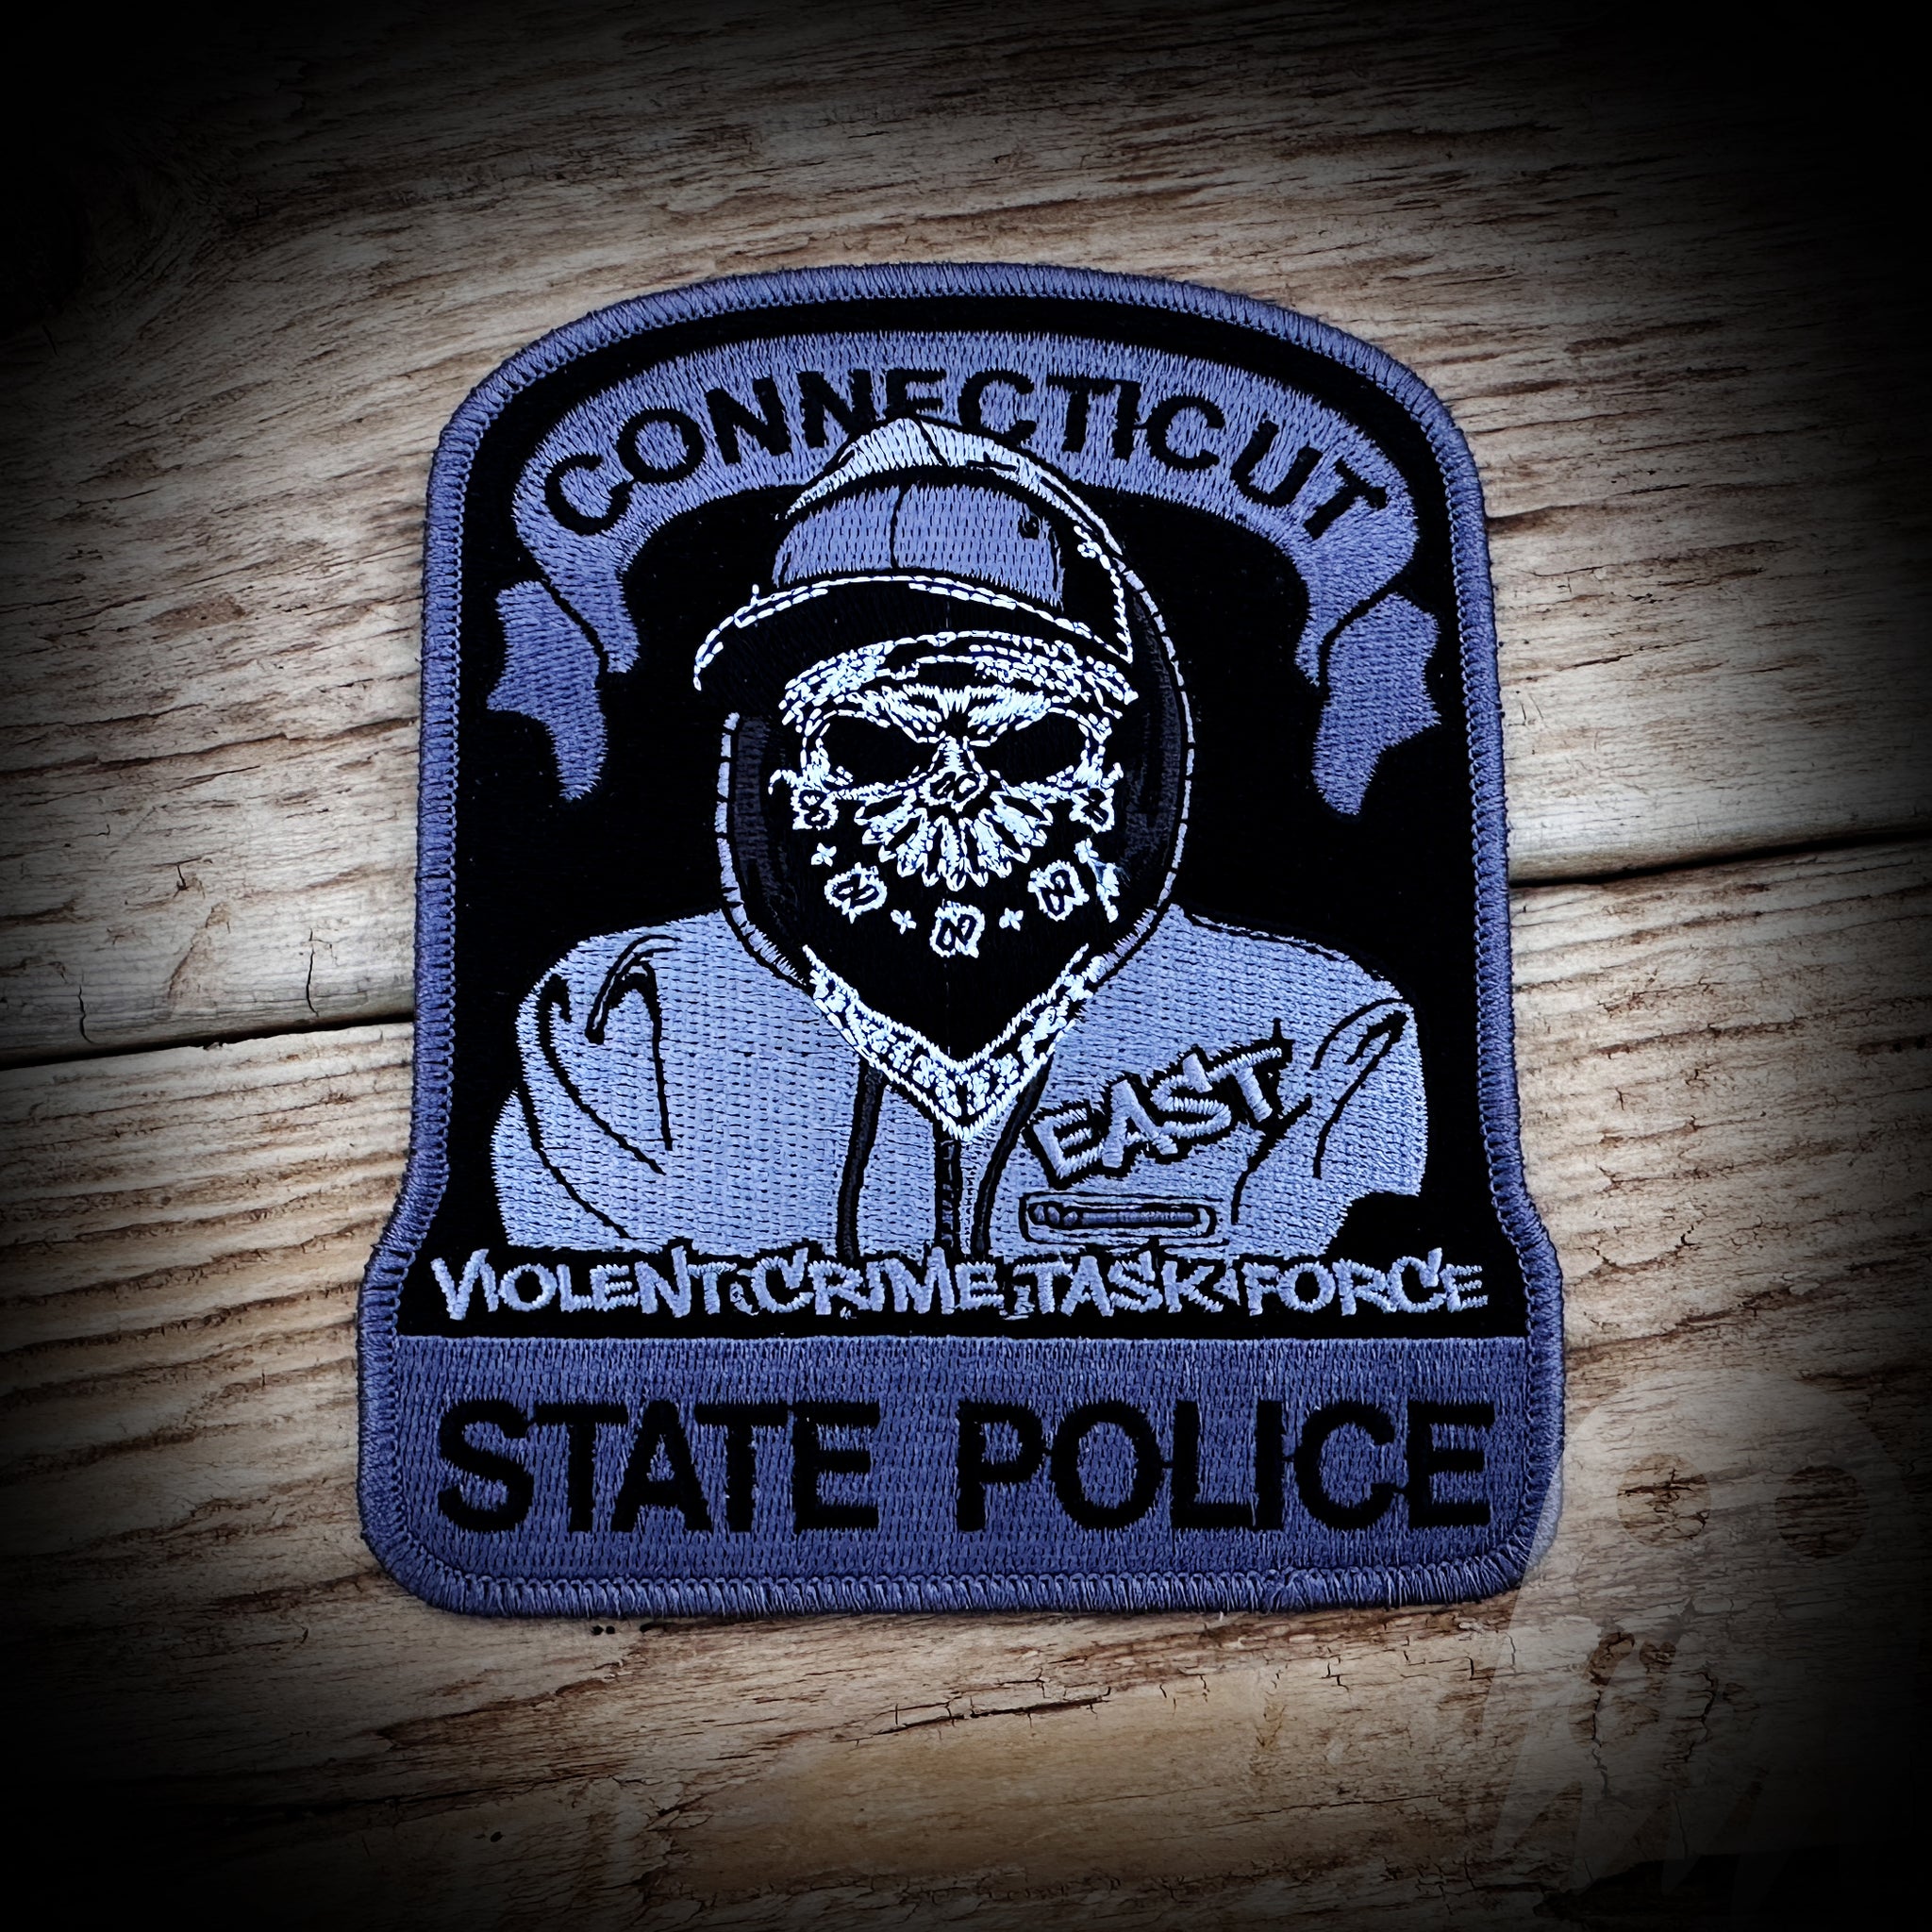 Connecticut State Police Violent Crime Task Force Patch